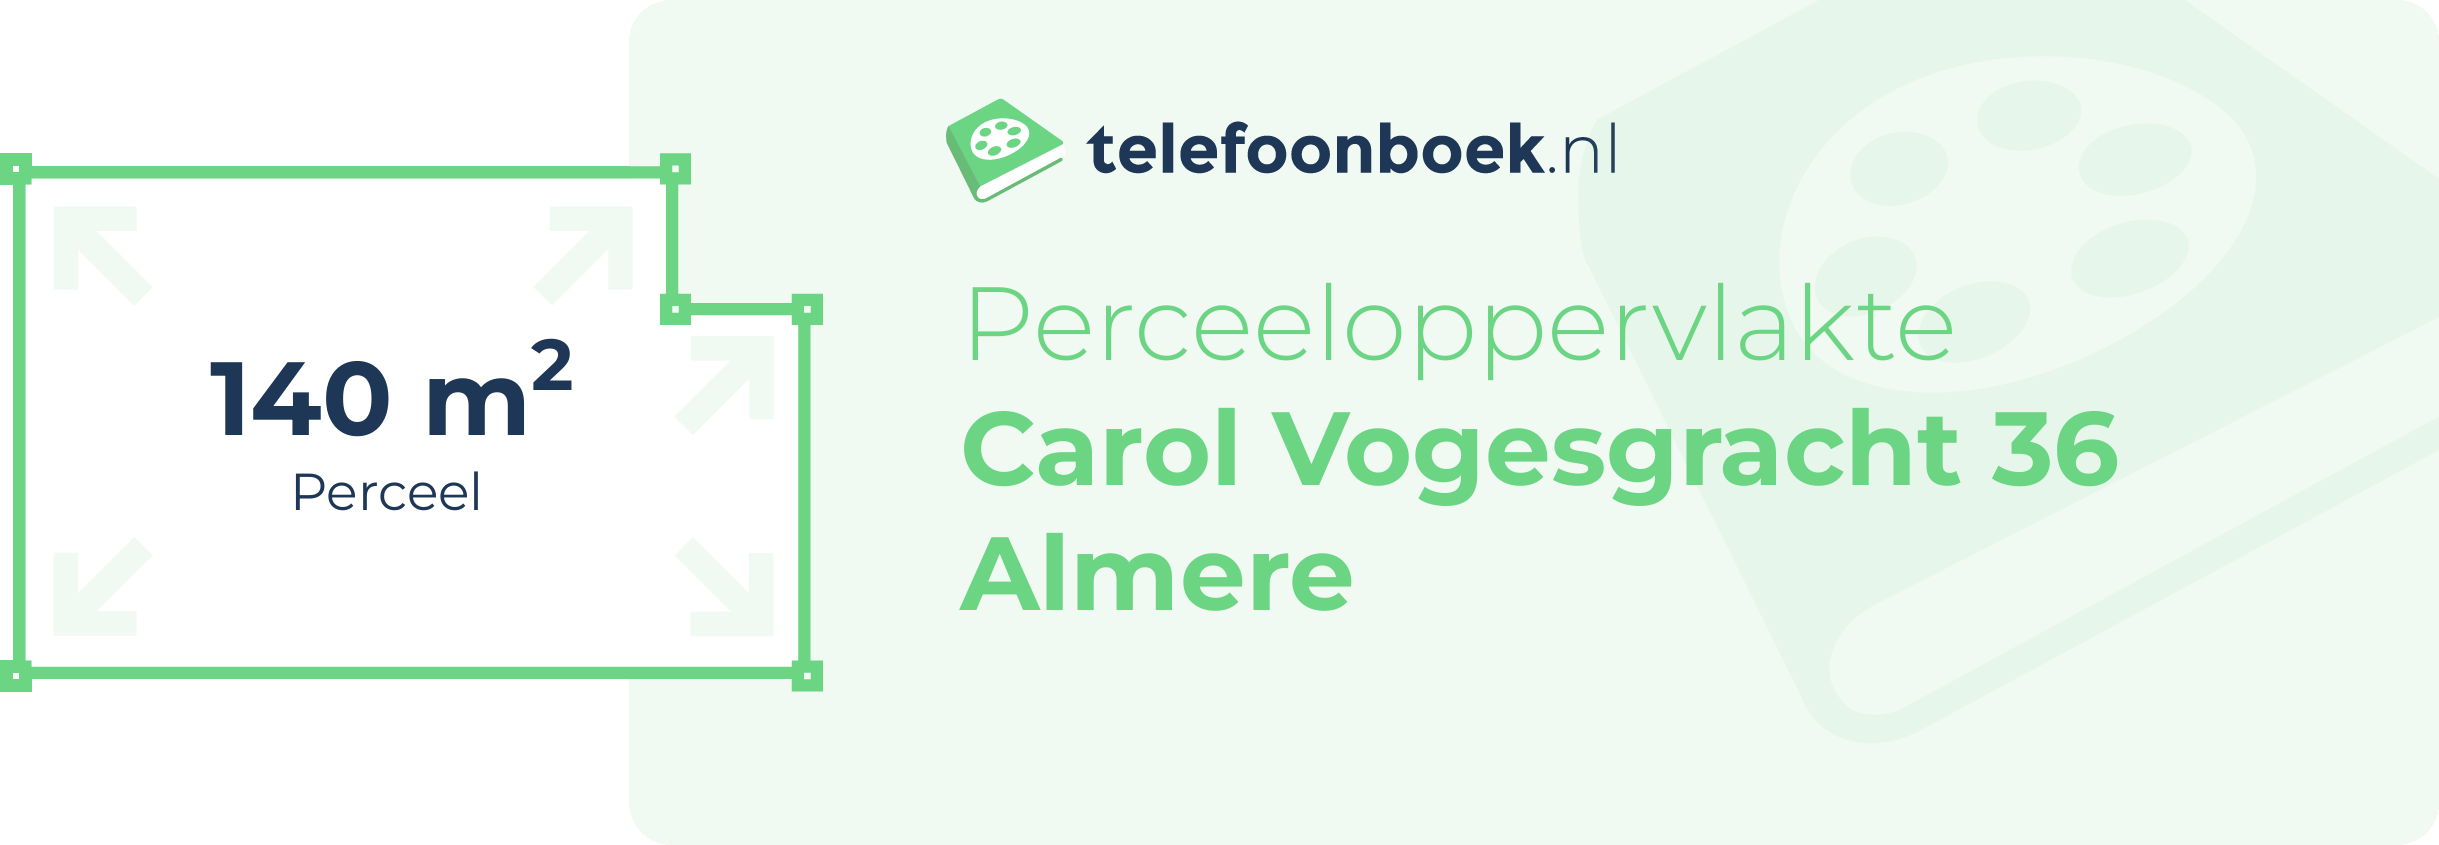 Perceeloppervlakte Carol Vogesgracht 36 Almere